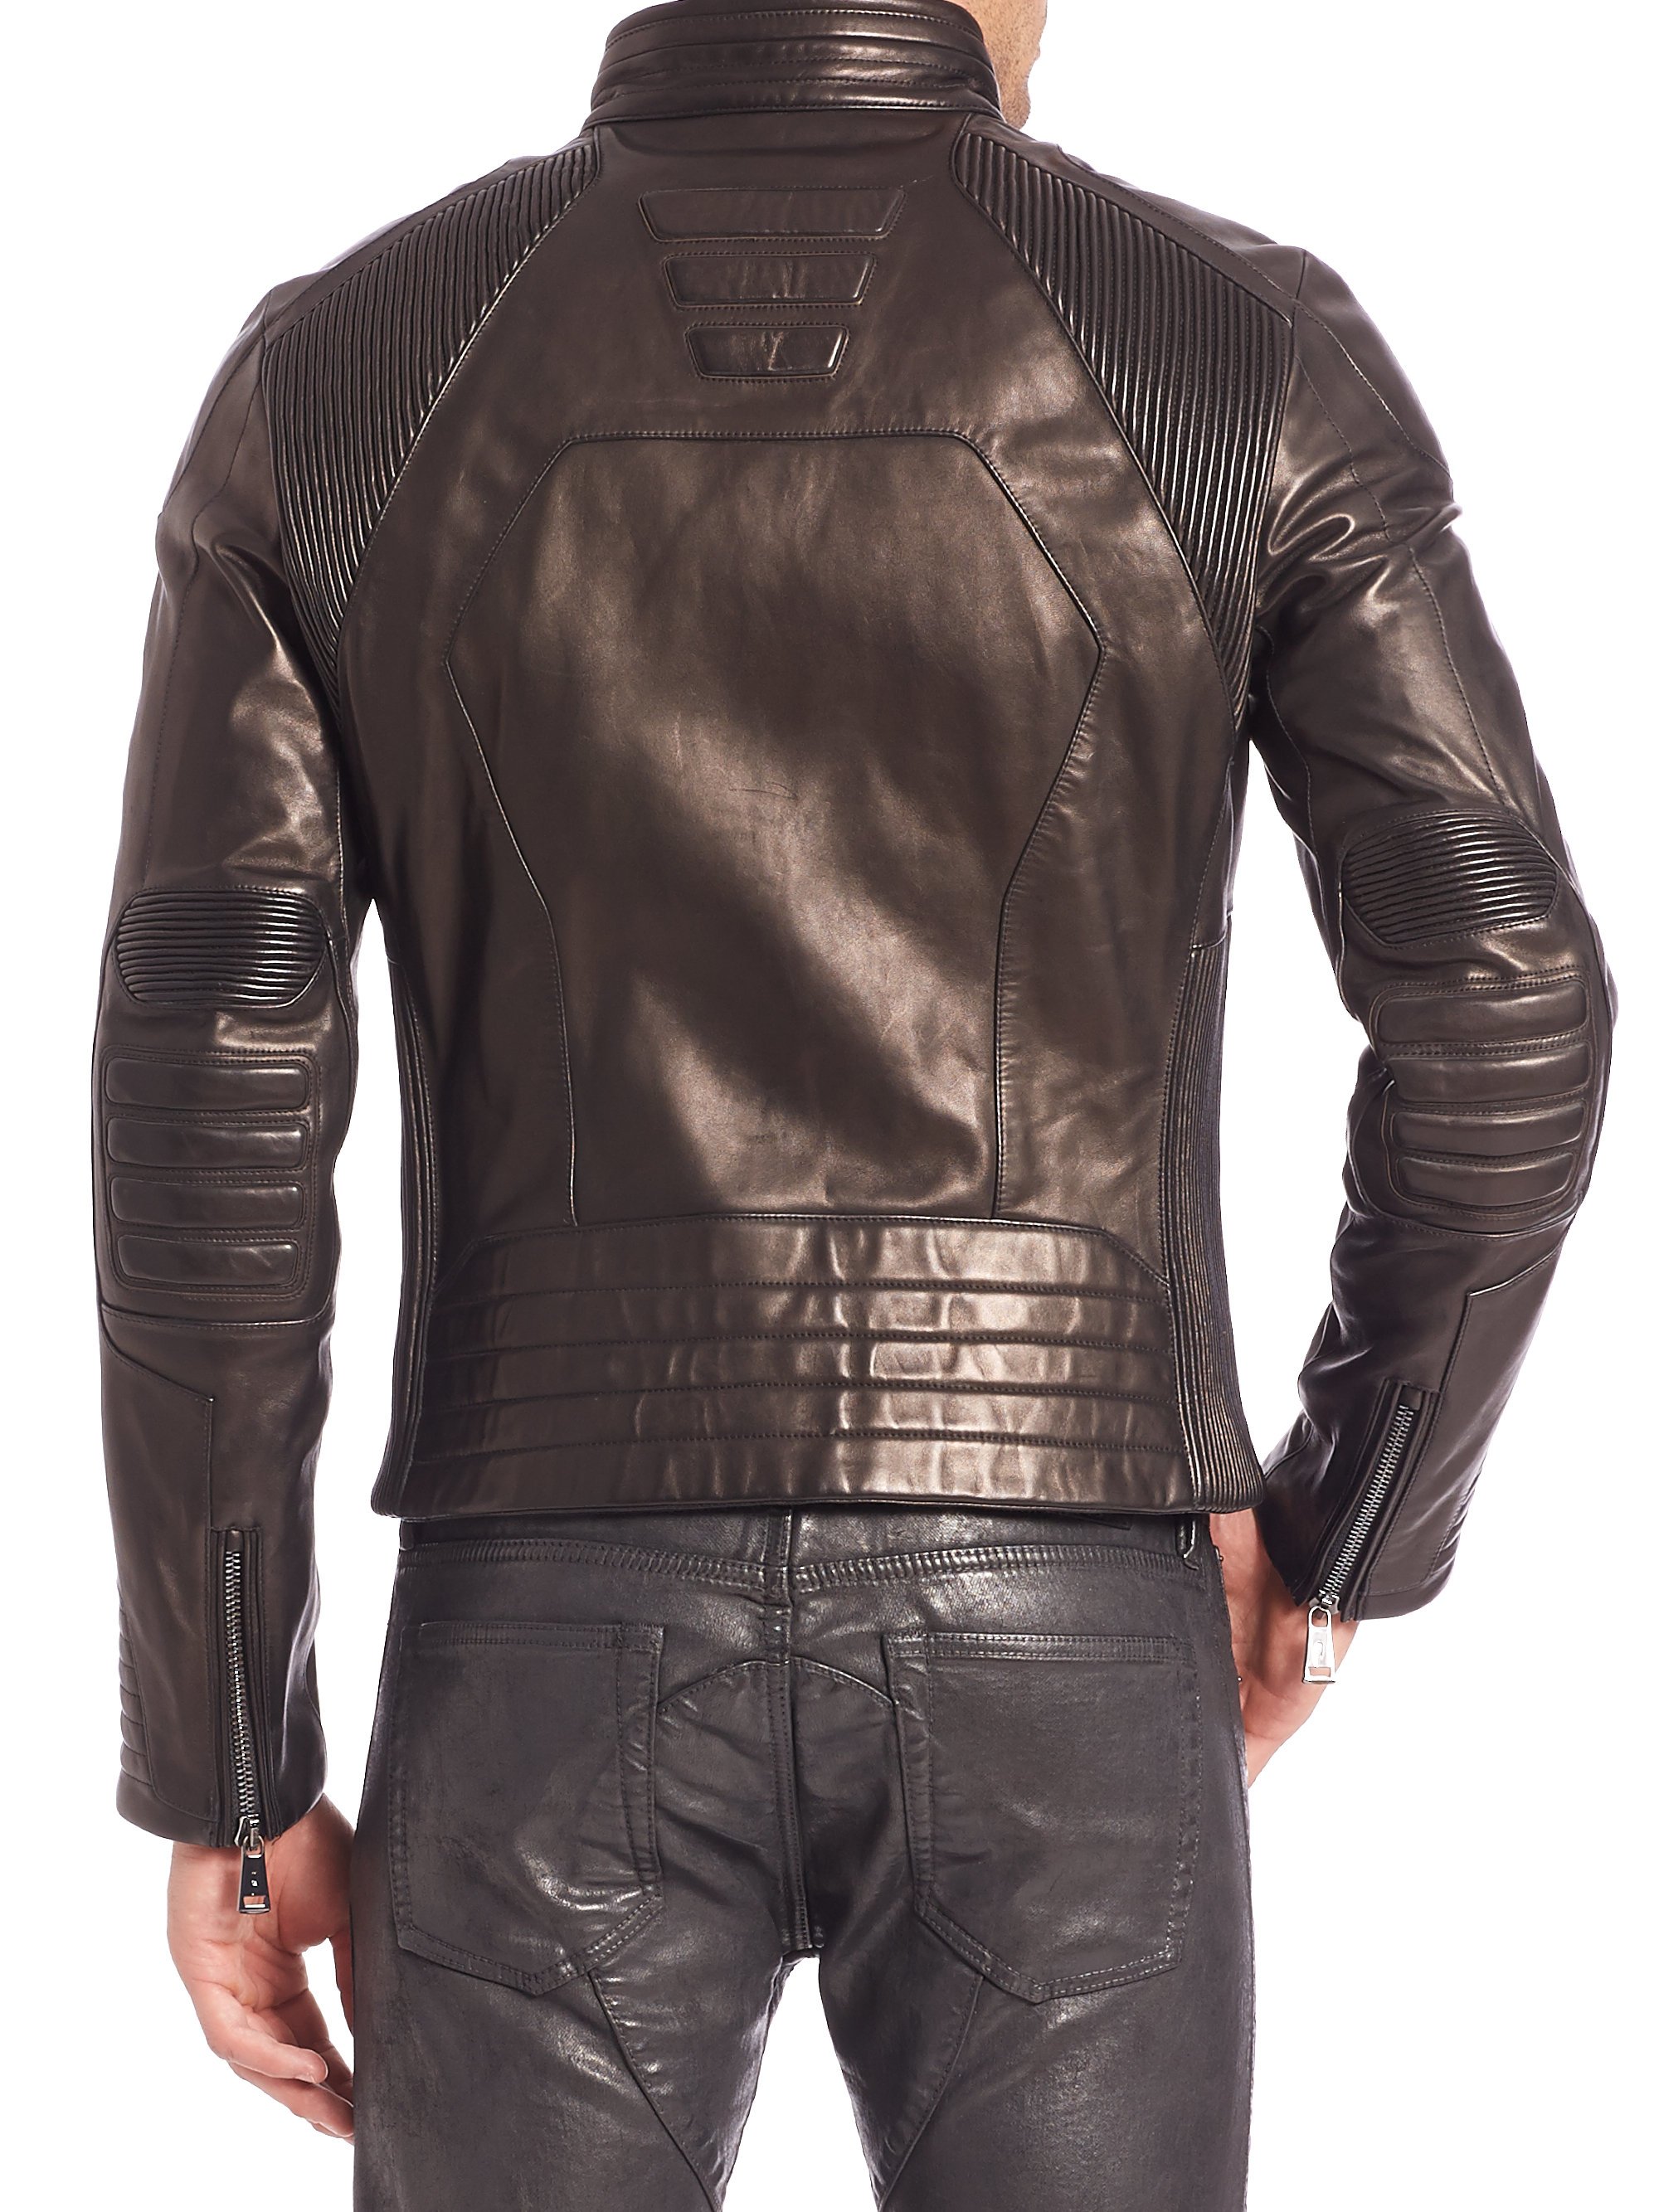 Lyst - Ralph Lauren Black Label Leather Biker Jacket in Black for Men